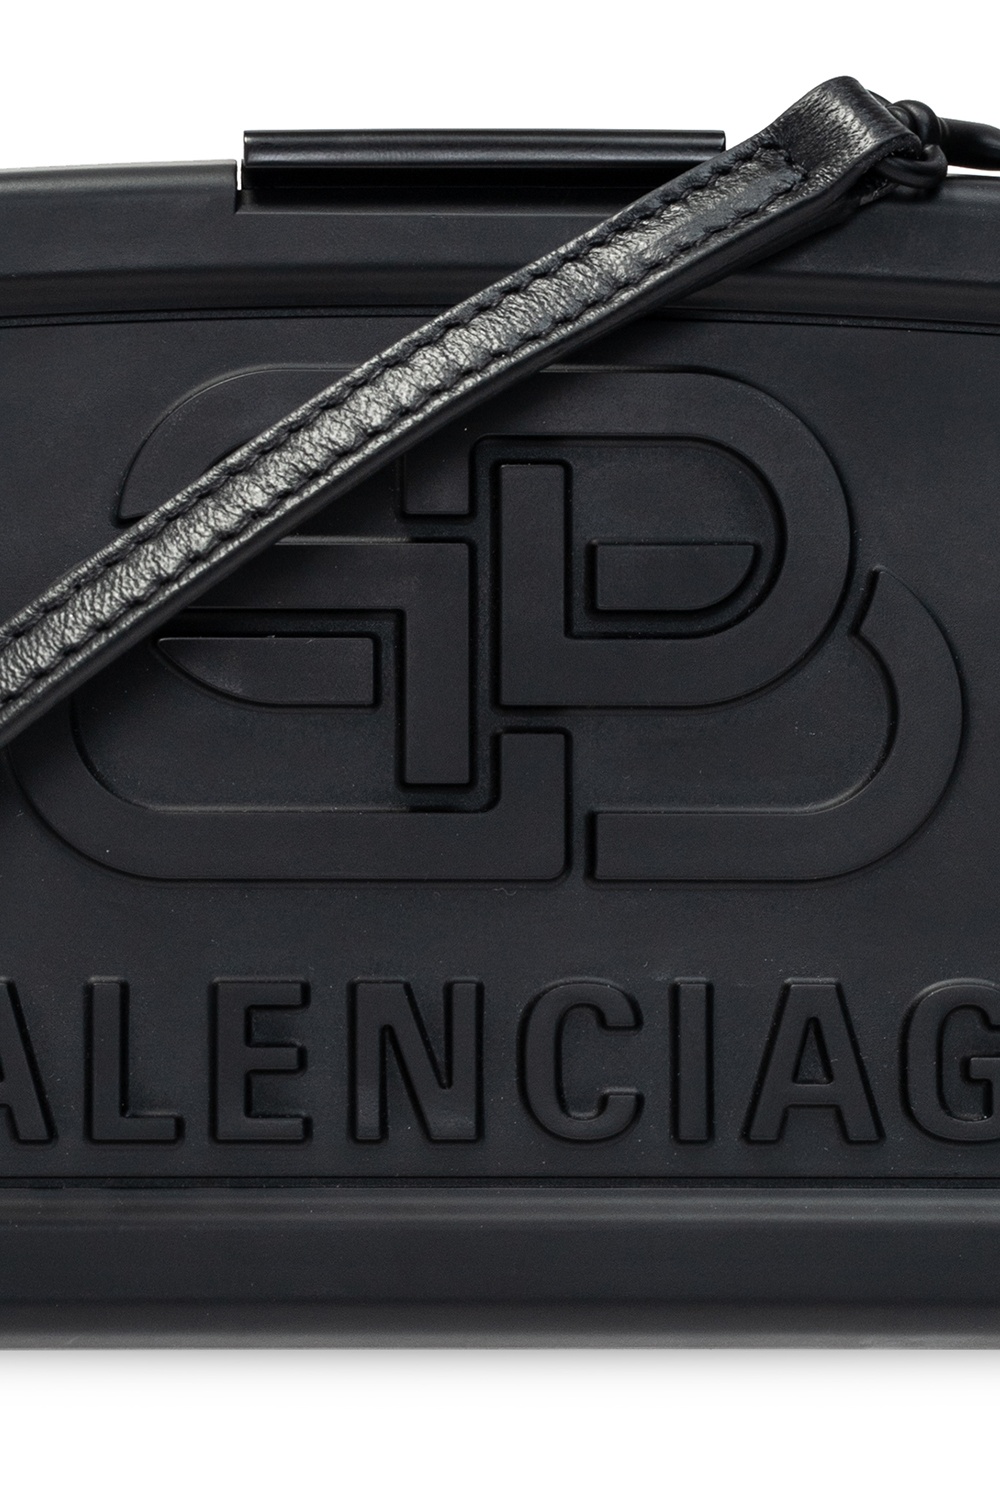 Balenciaga Logo Lunch Box Bag Plastic - ShopStyle